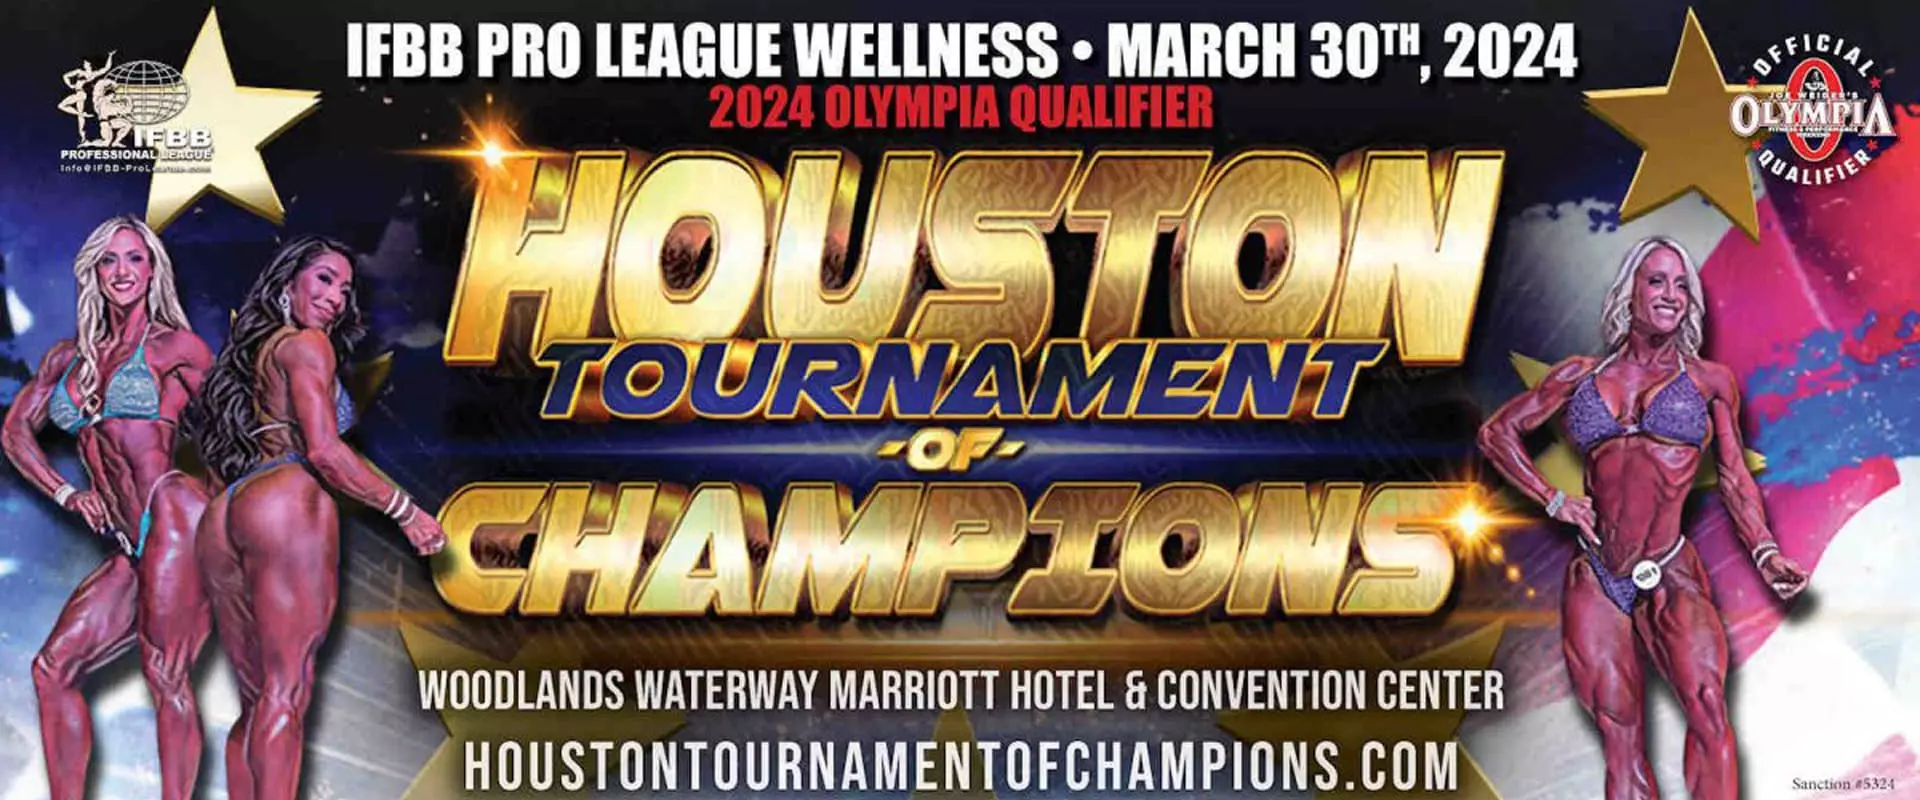 Tournoi Wellness des Champions de Houston 2024